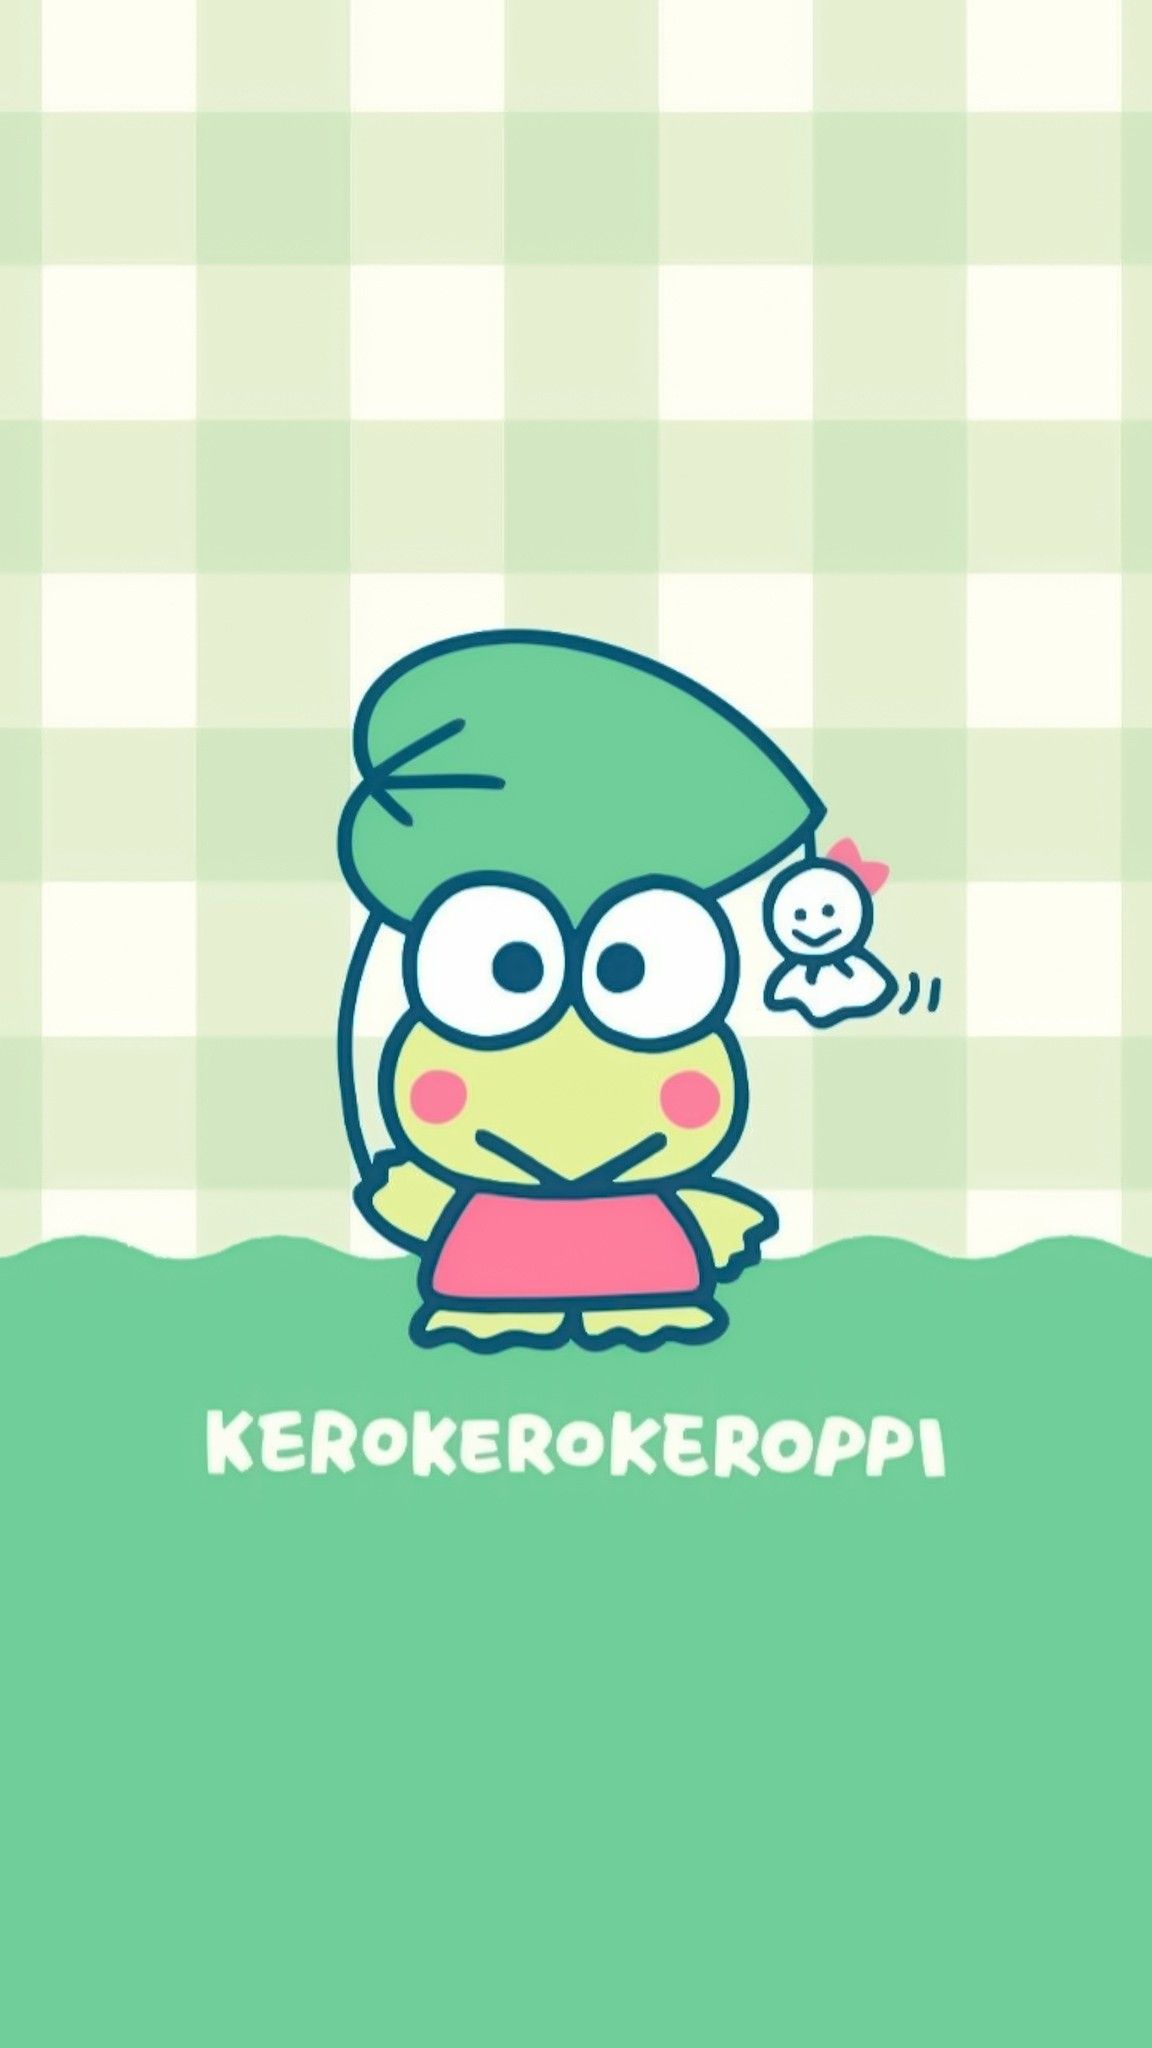 A cute cartoon character with the word keokrokeropi - Keroppi